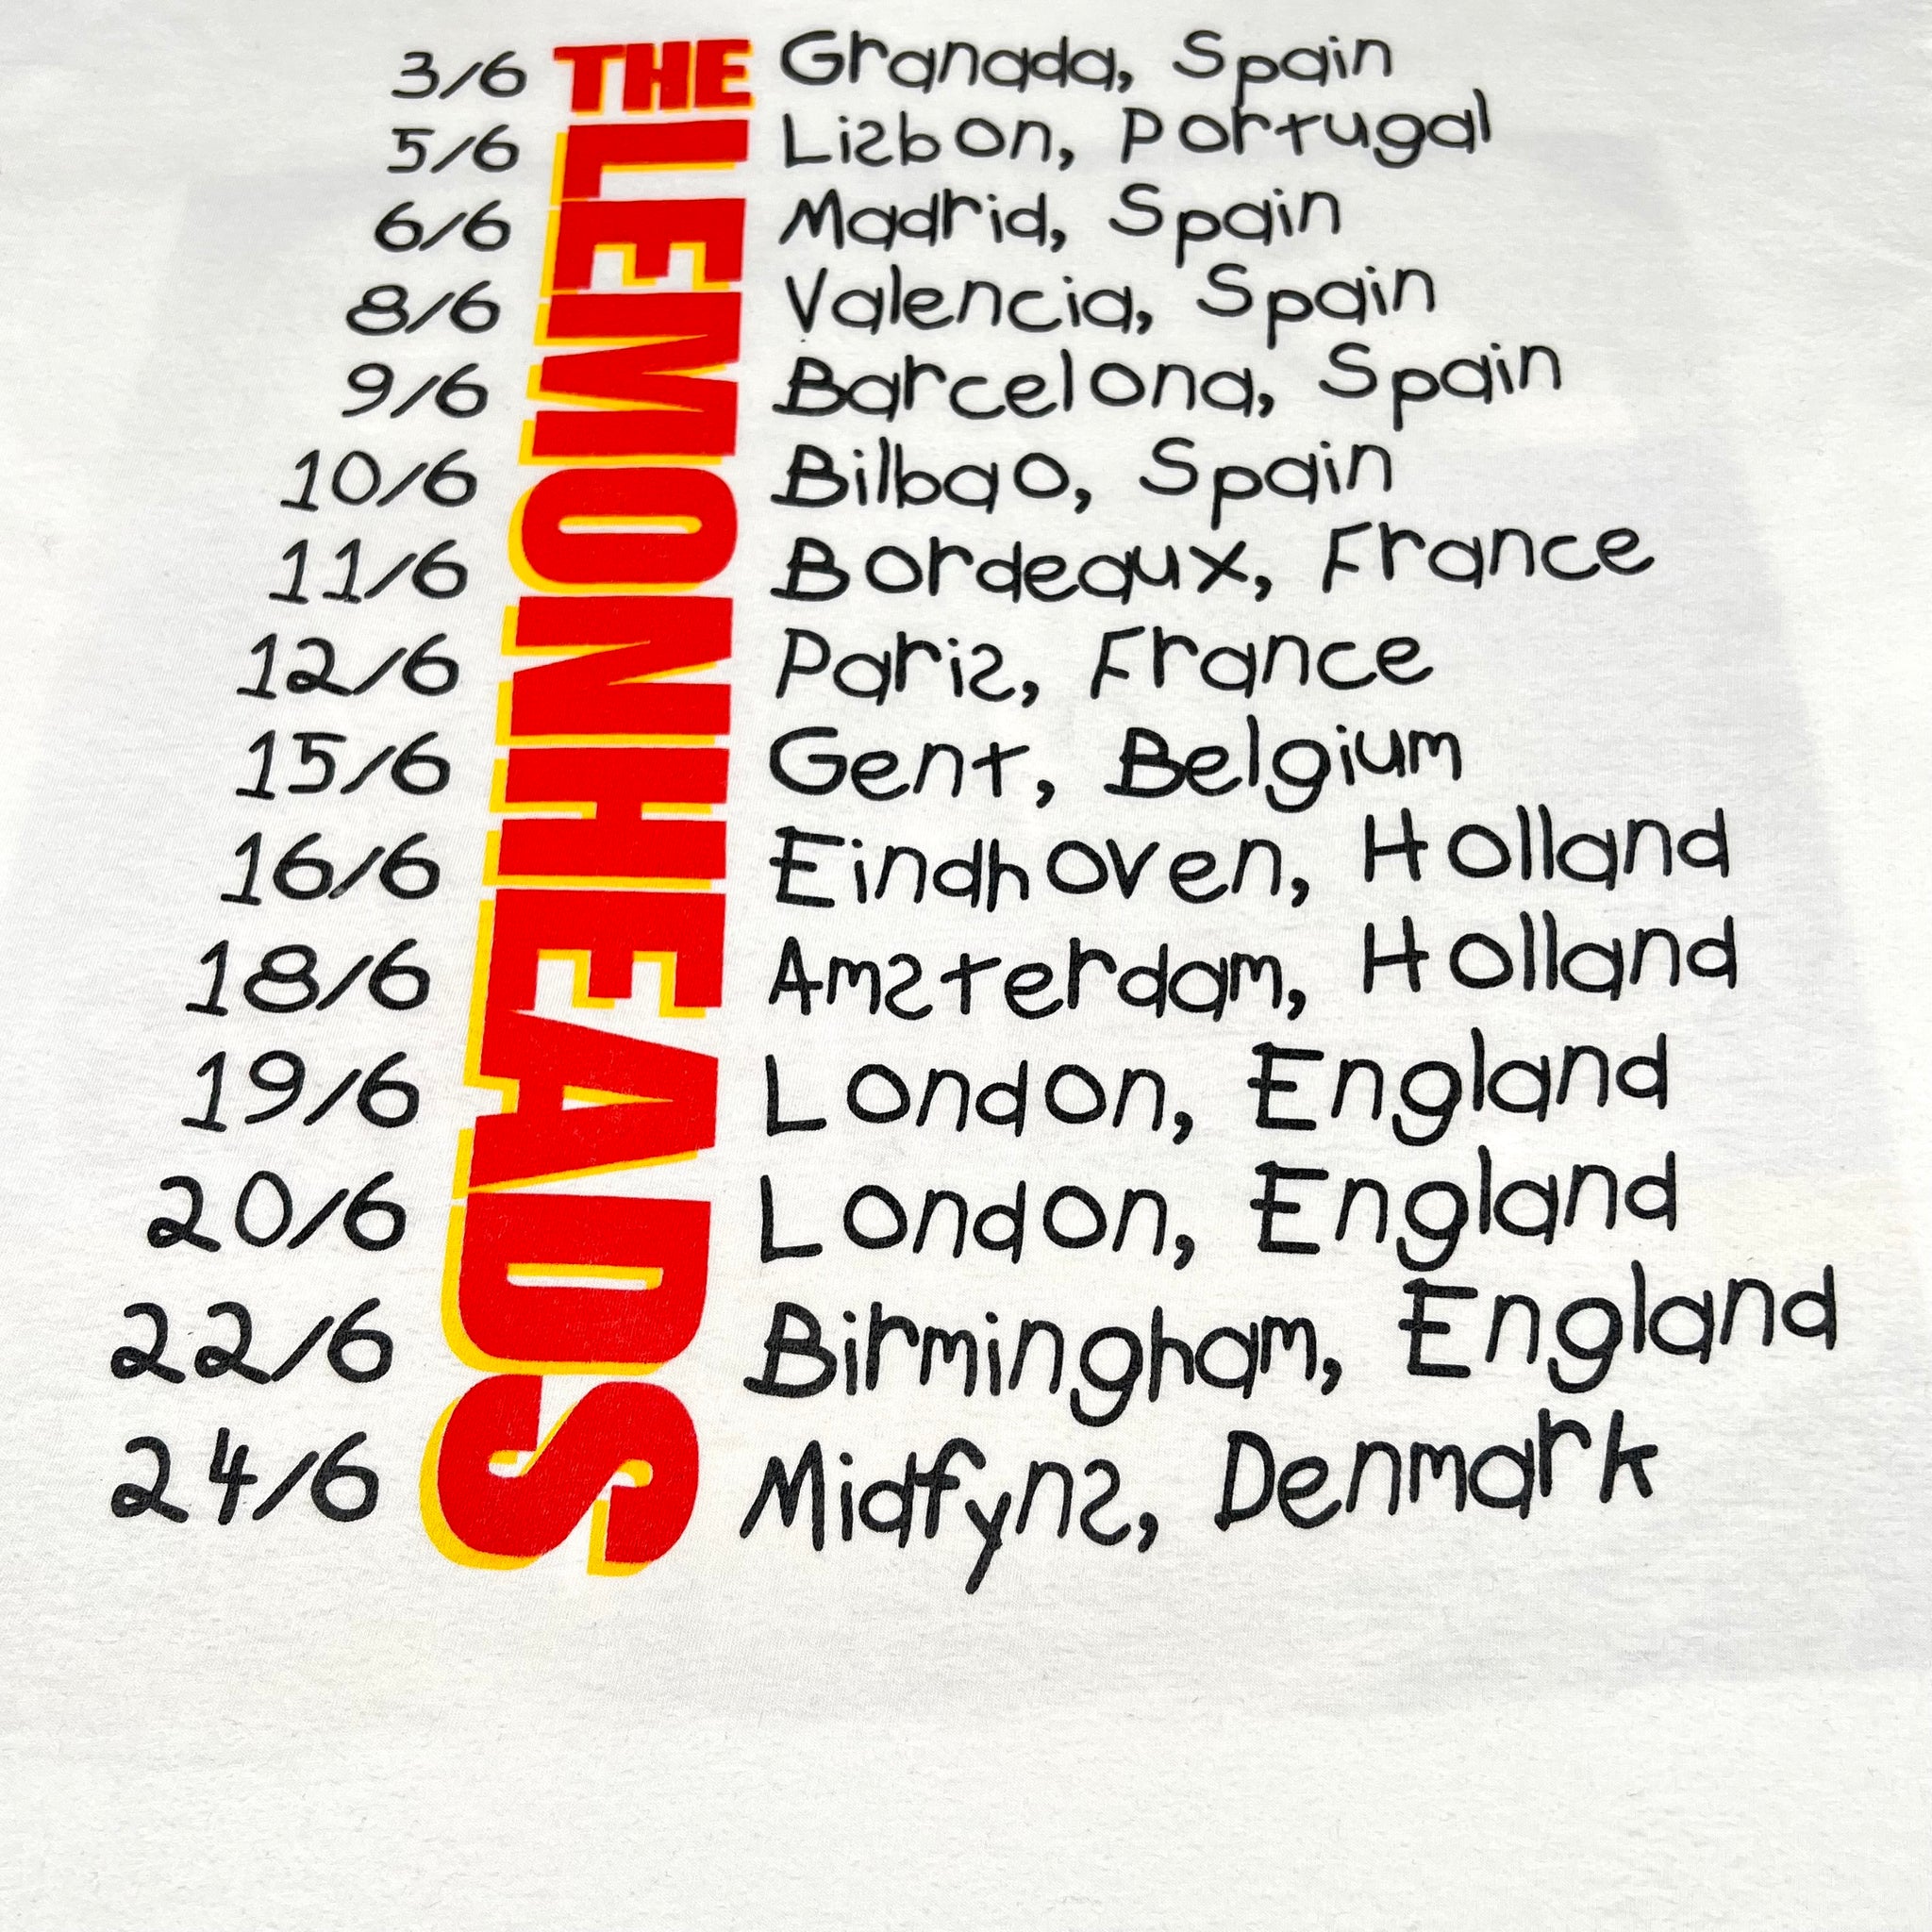 THE LEMONHEADS | ‘European Tour’ | 1994 | XL